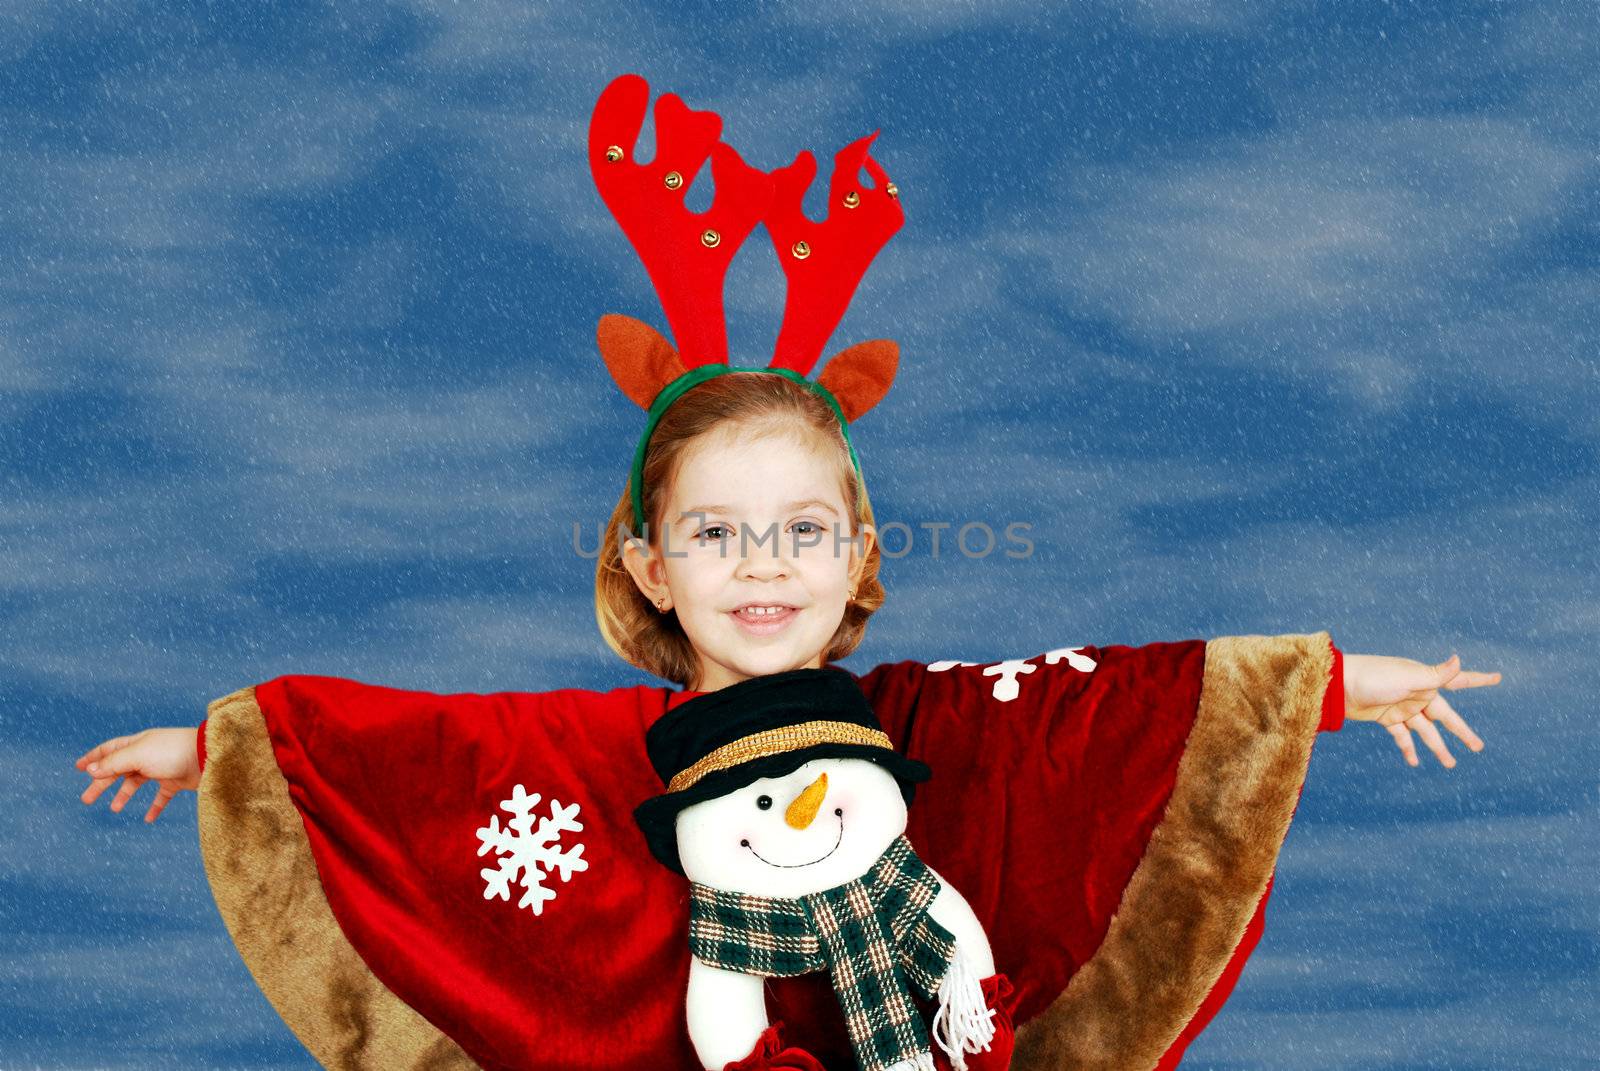 beautiful little girl with deer Rudolf horn on head